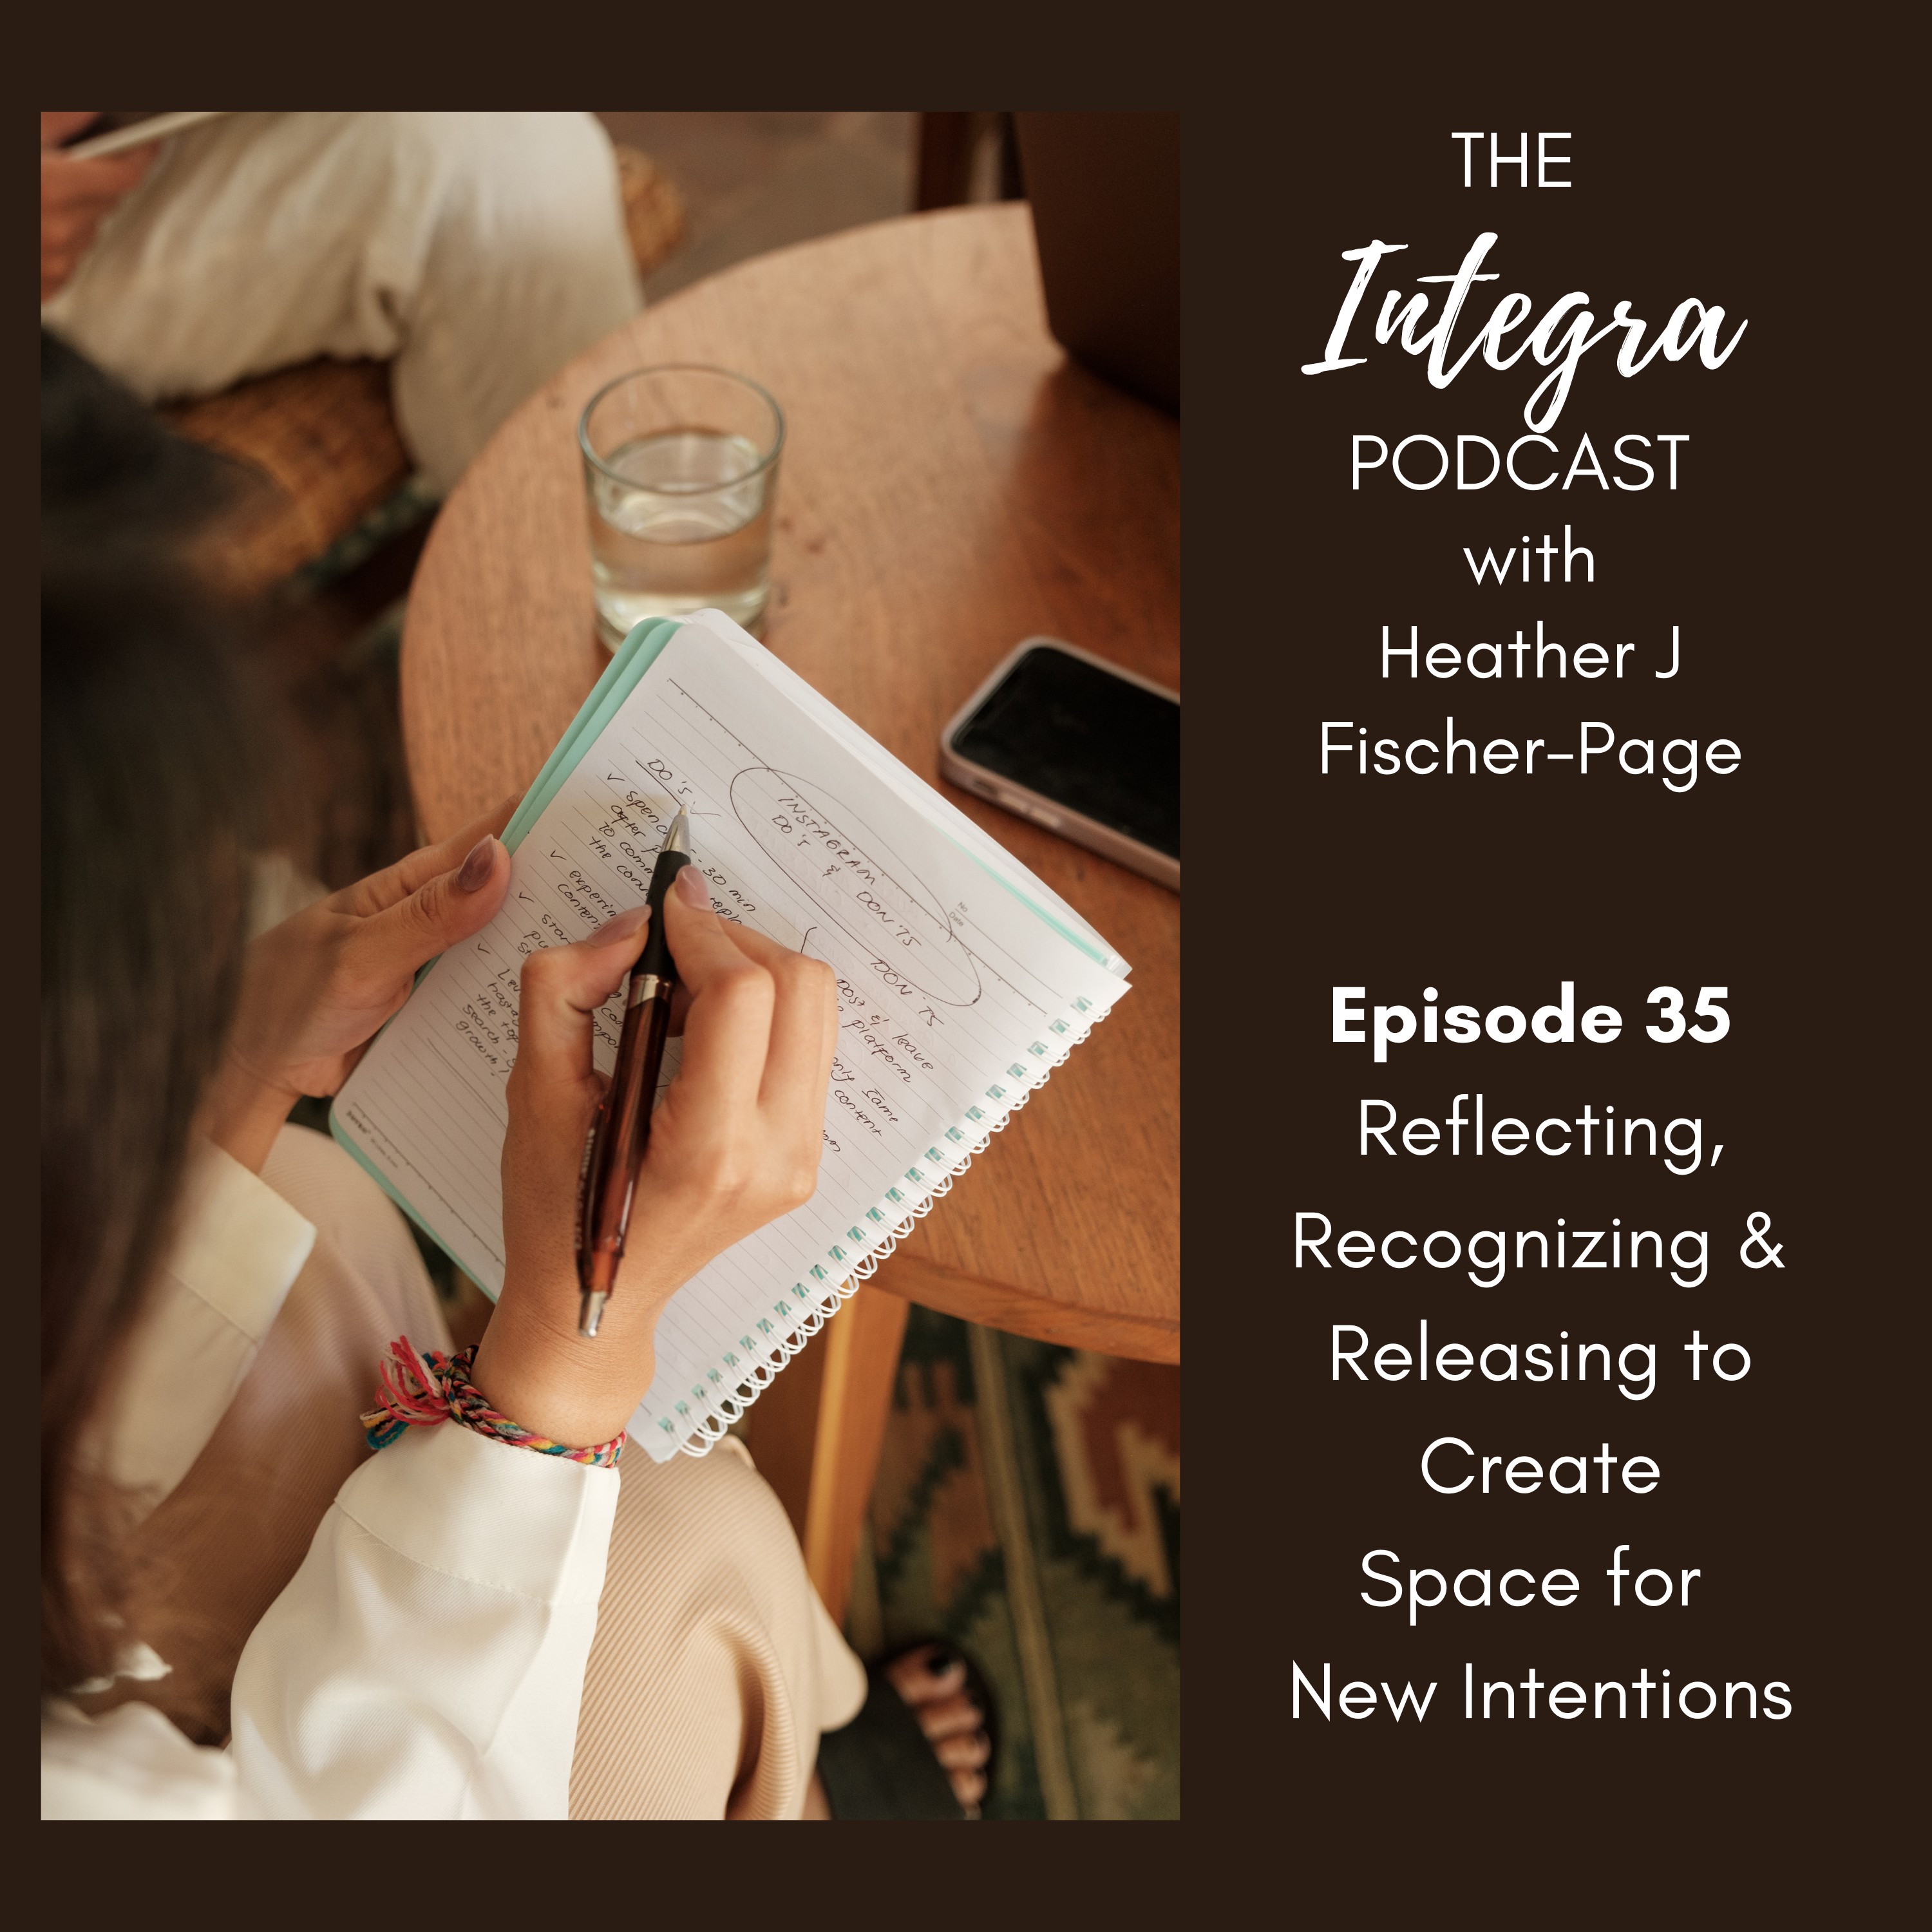 The Integra Podcast